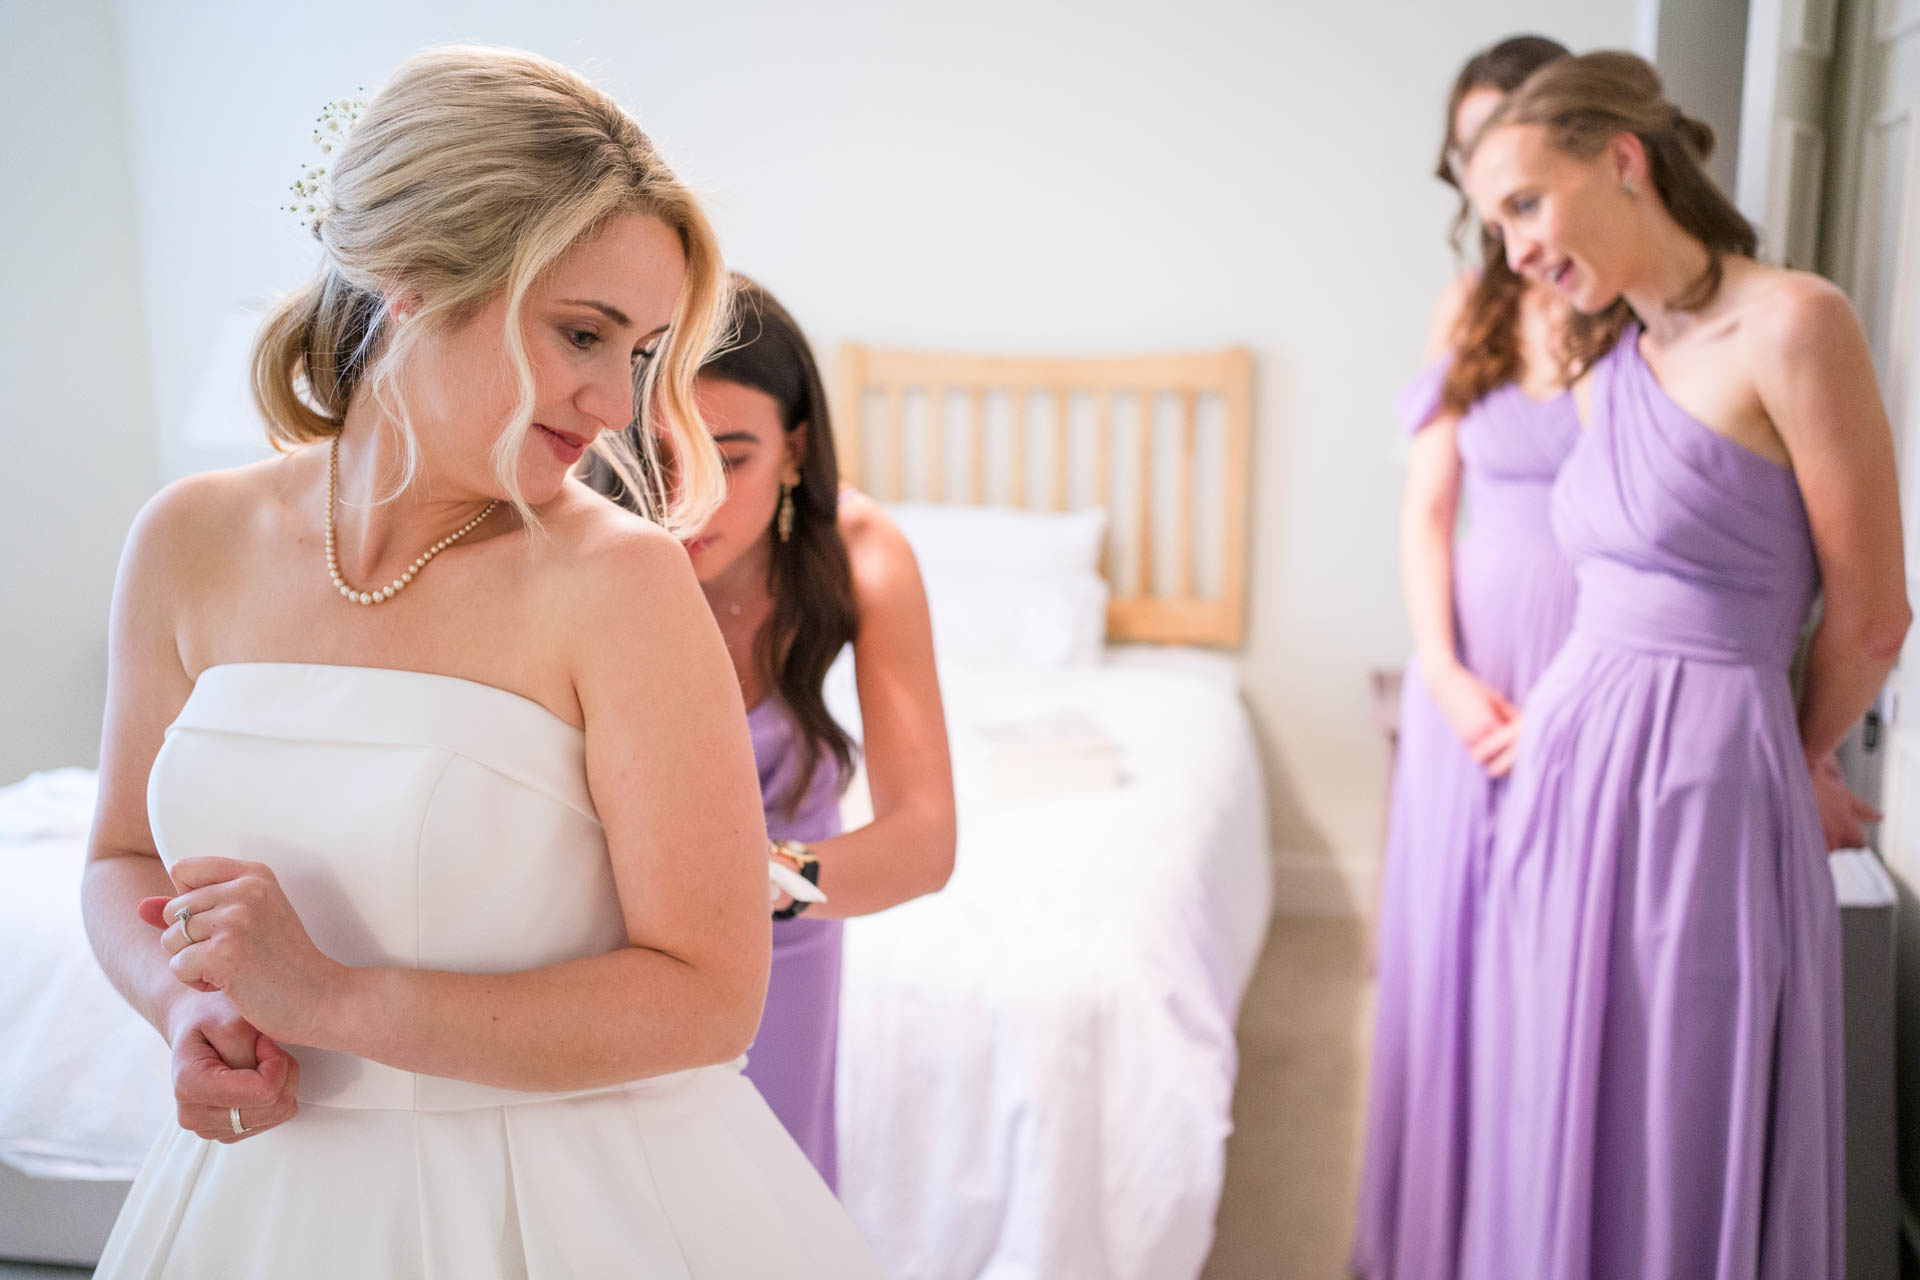 Hollie's bridesmaids helping her get into her wedding dress